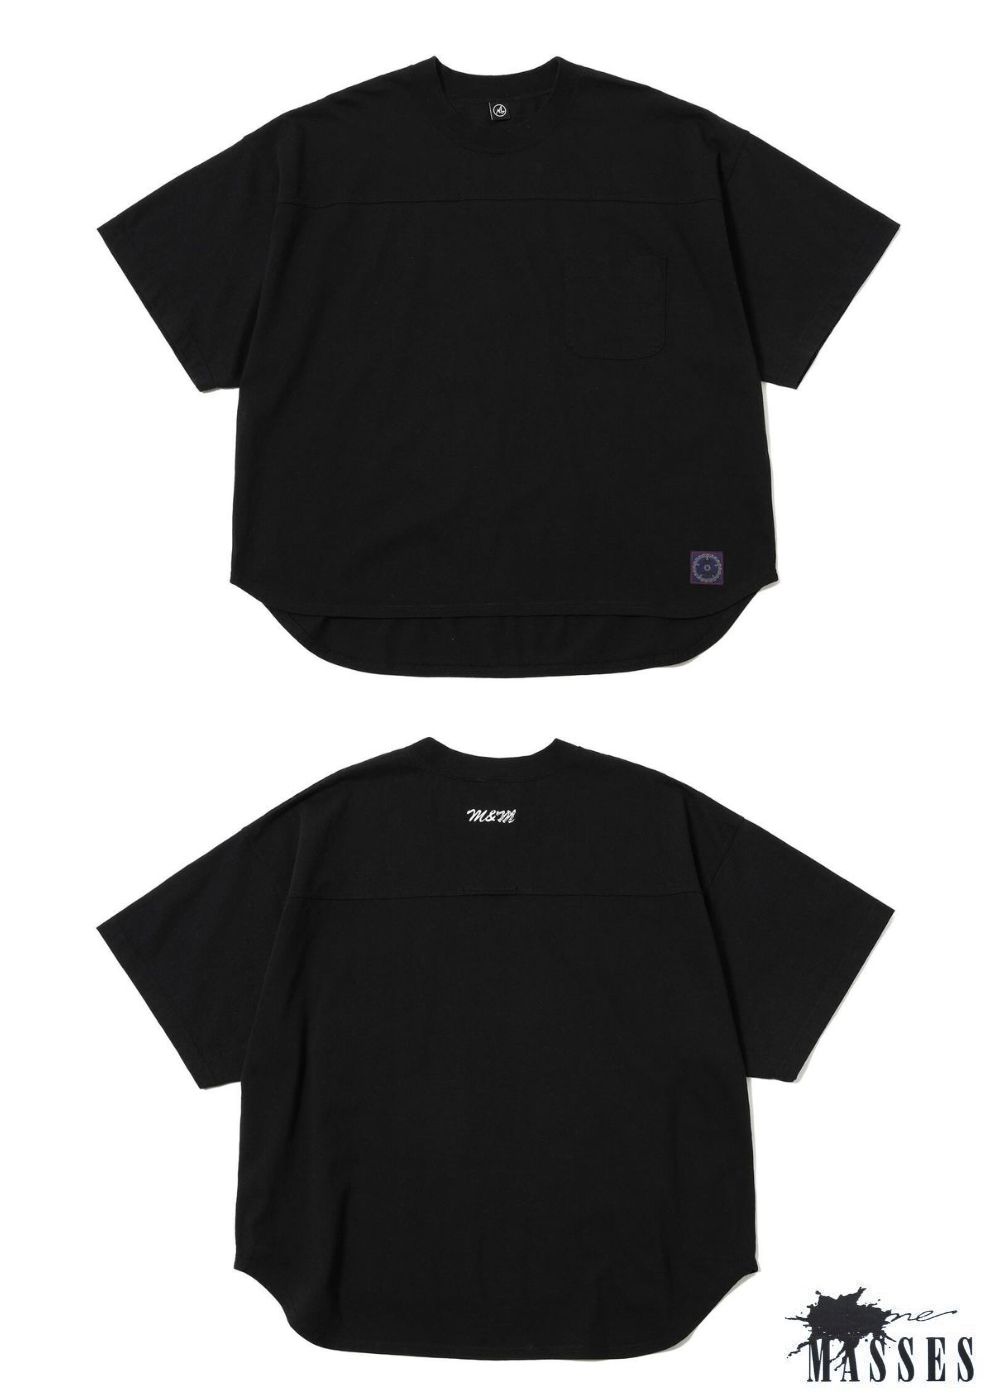 m&m custom performance 初期 釘 Tシャツ BLACK - Tシャツ/カットソー